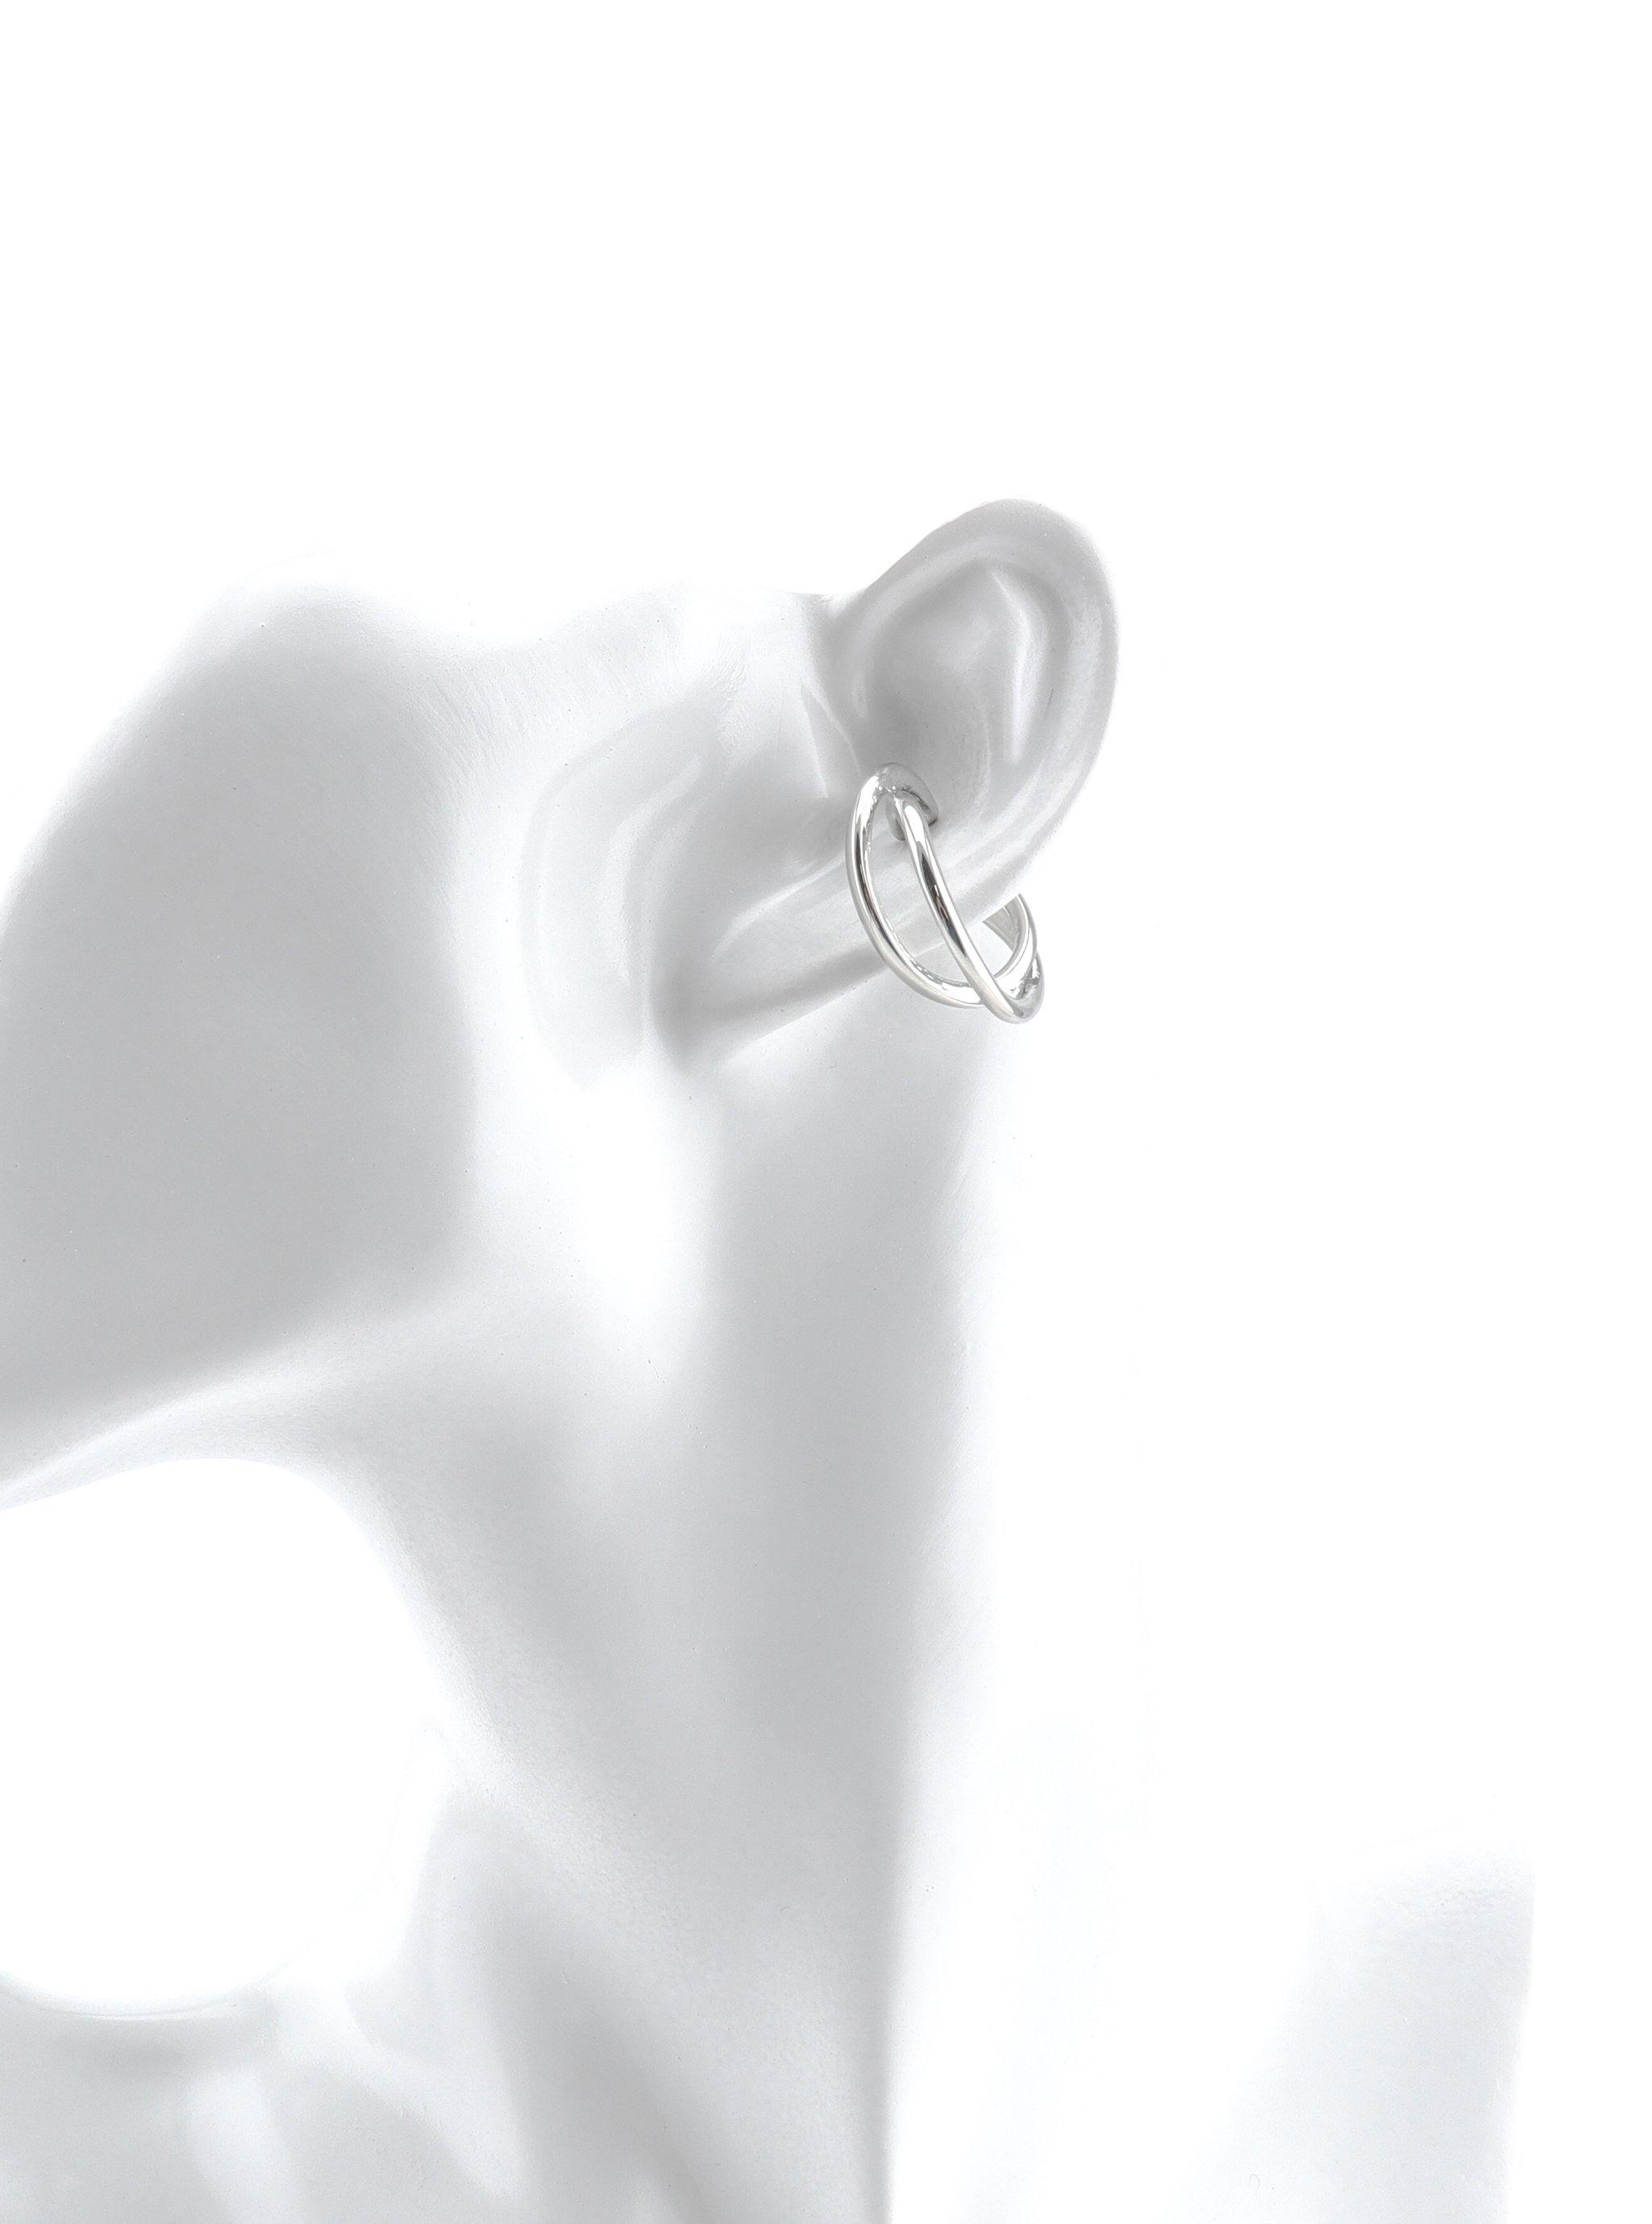 TERRA EAR CUFF/RING - Simplique Mode